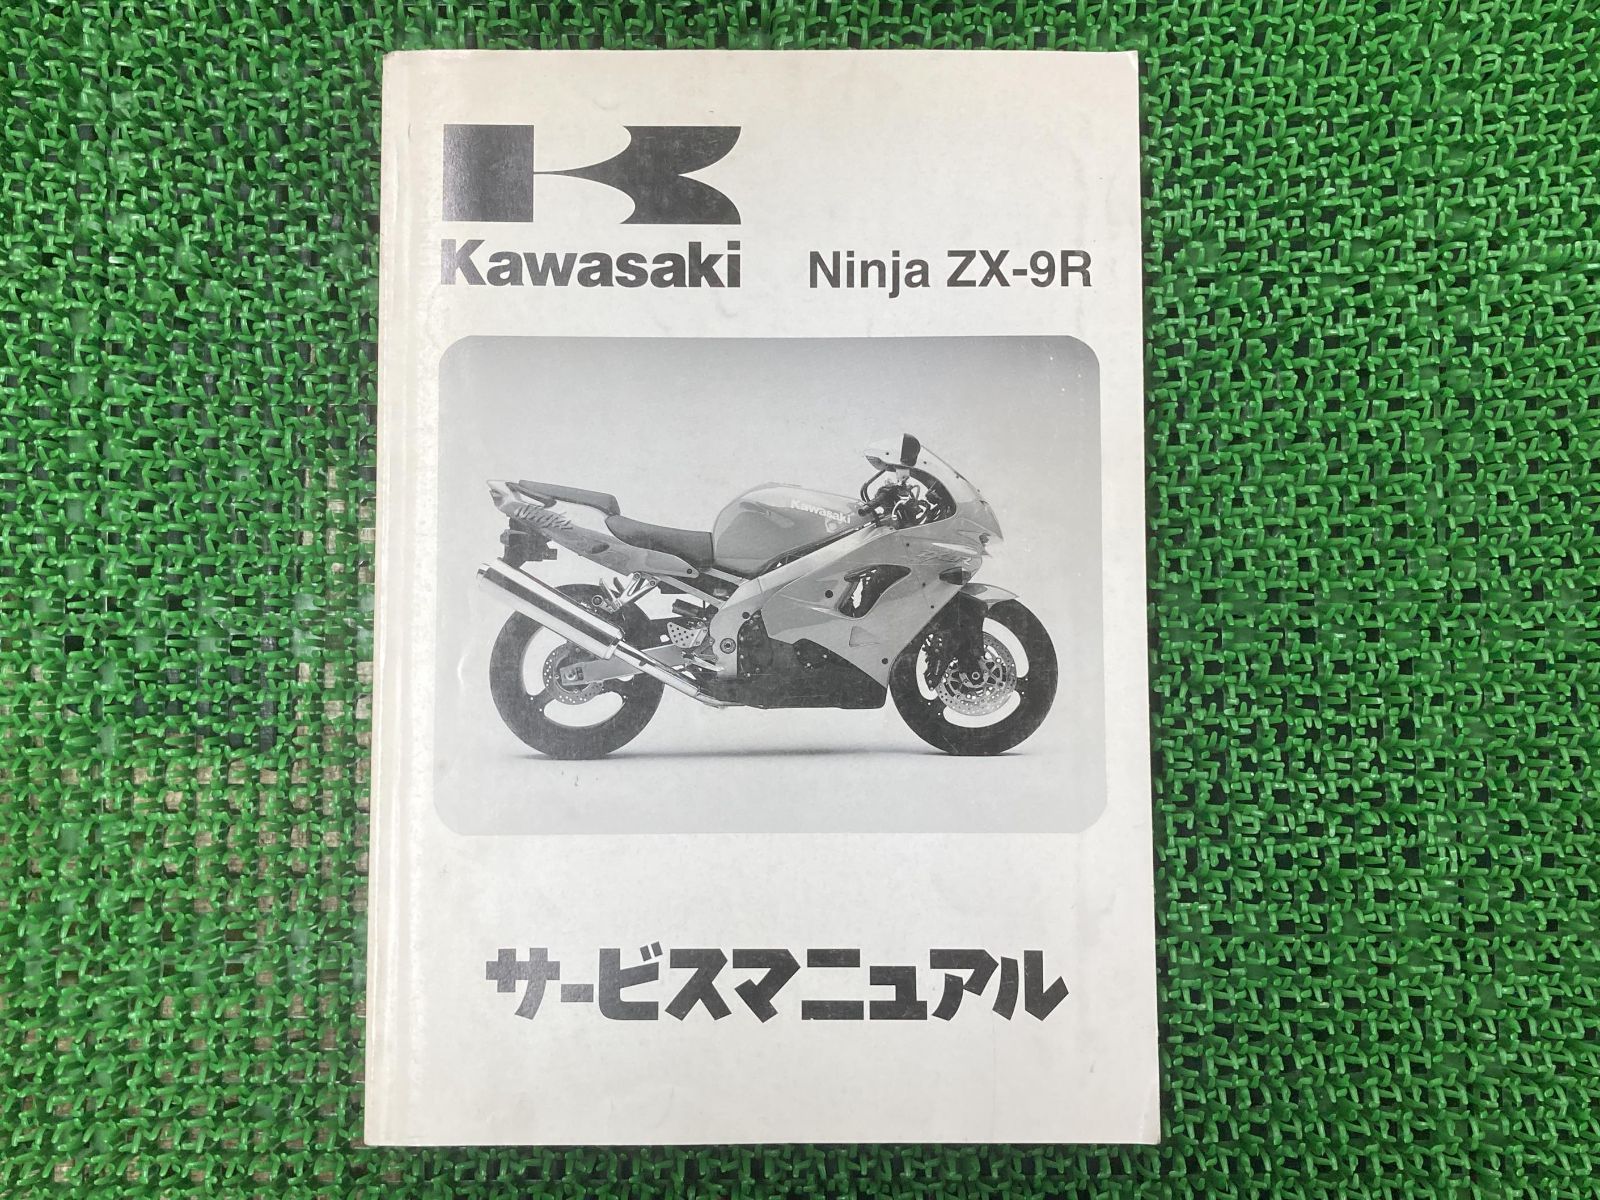 NinjaZX-9R サービスマニュアル 1版 カワサキ 正規  バイク 整備書 ZX900-C1 ZX900-D1 ZX900-C2 ZX900-D2 配線図有り 車検 整備情報:22289558